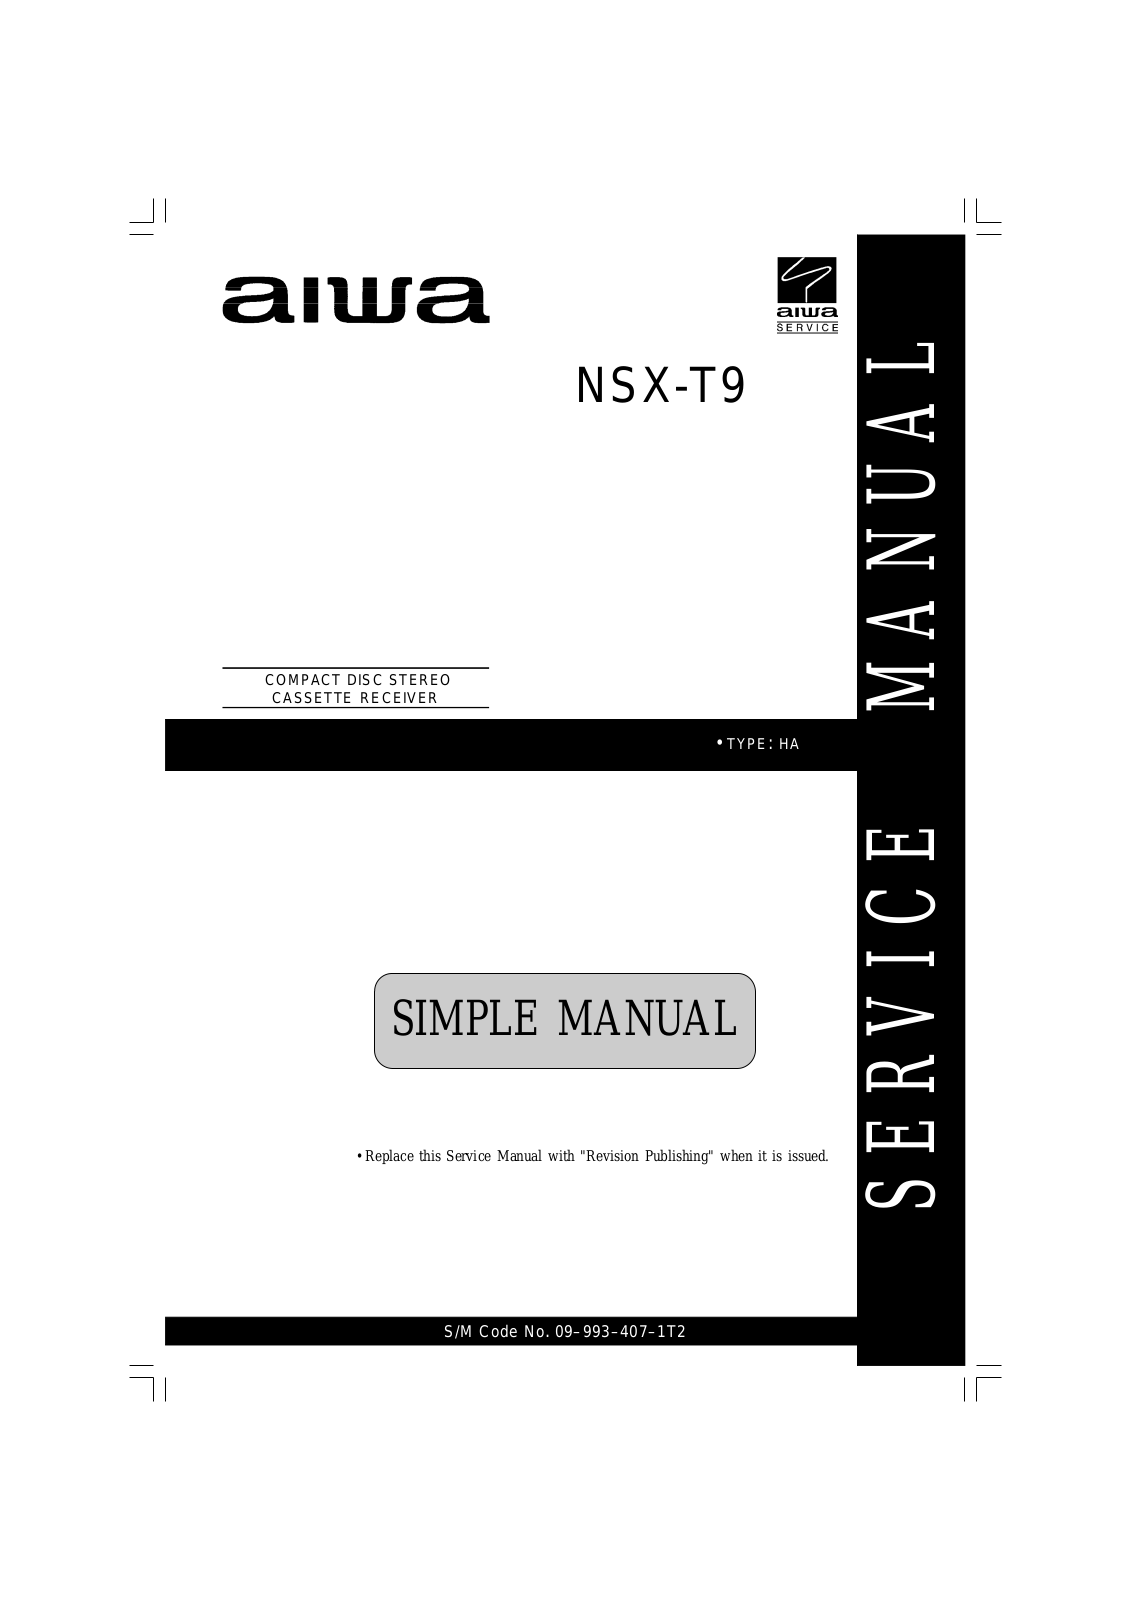 Aiwa NSX-T9 Service Manual